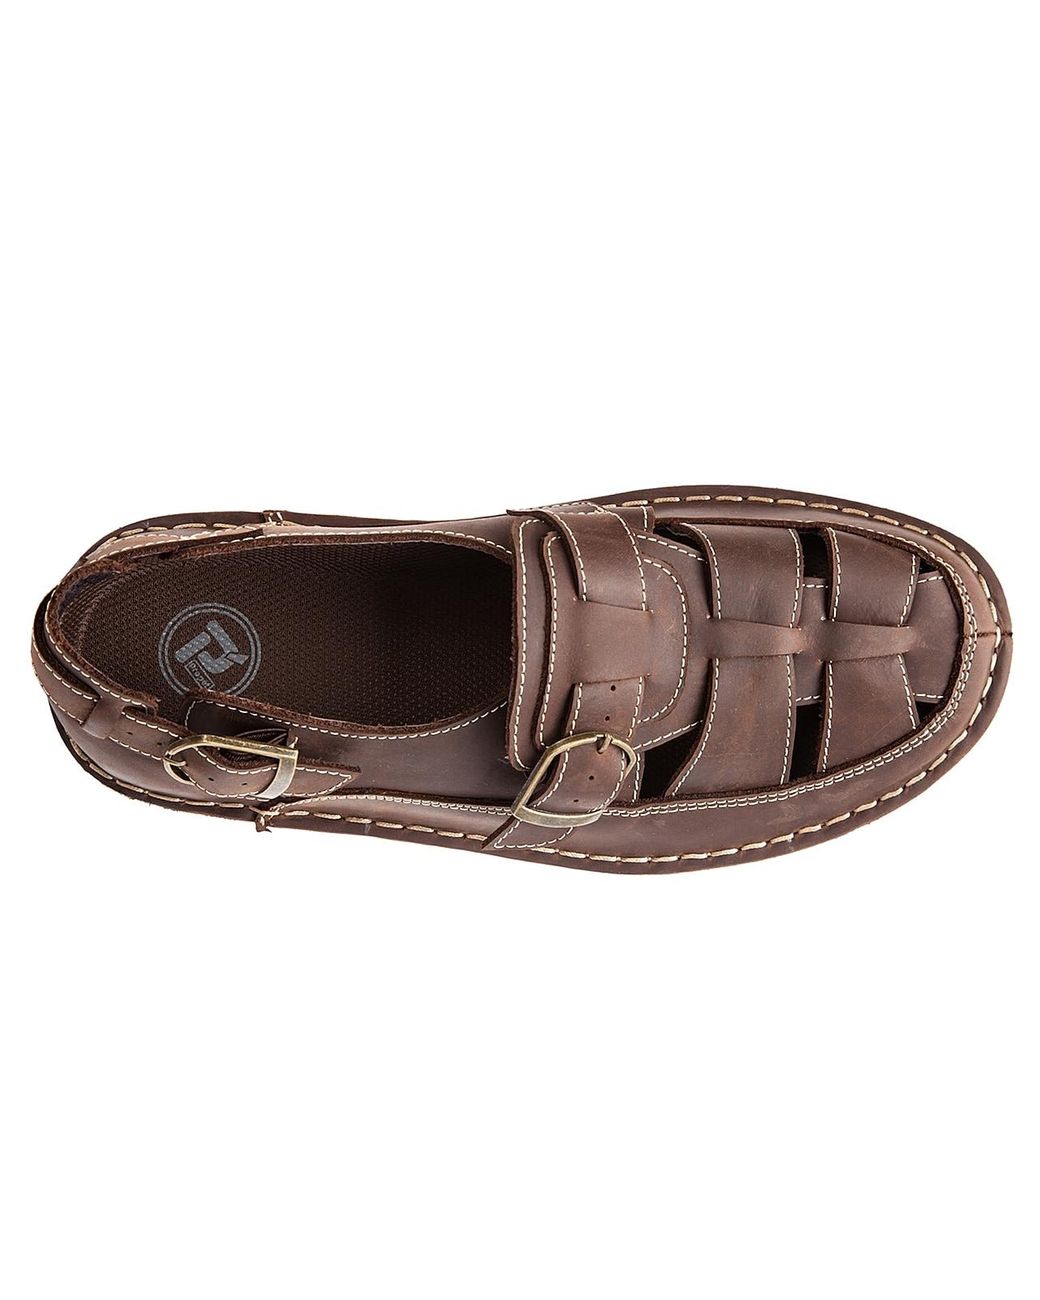 Propet Leather Villager Sandal in Dark Brown (Brown) for Men - Lyst